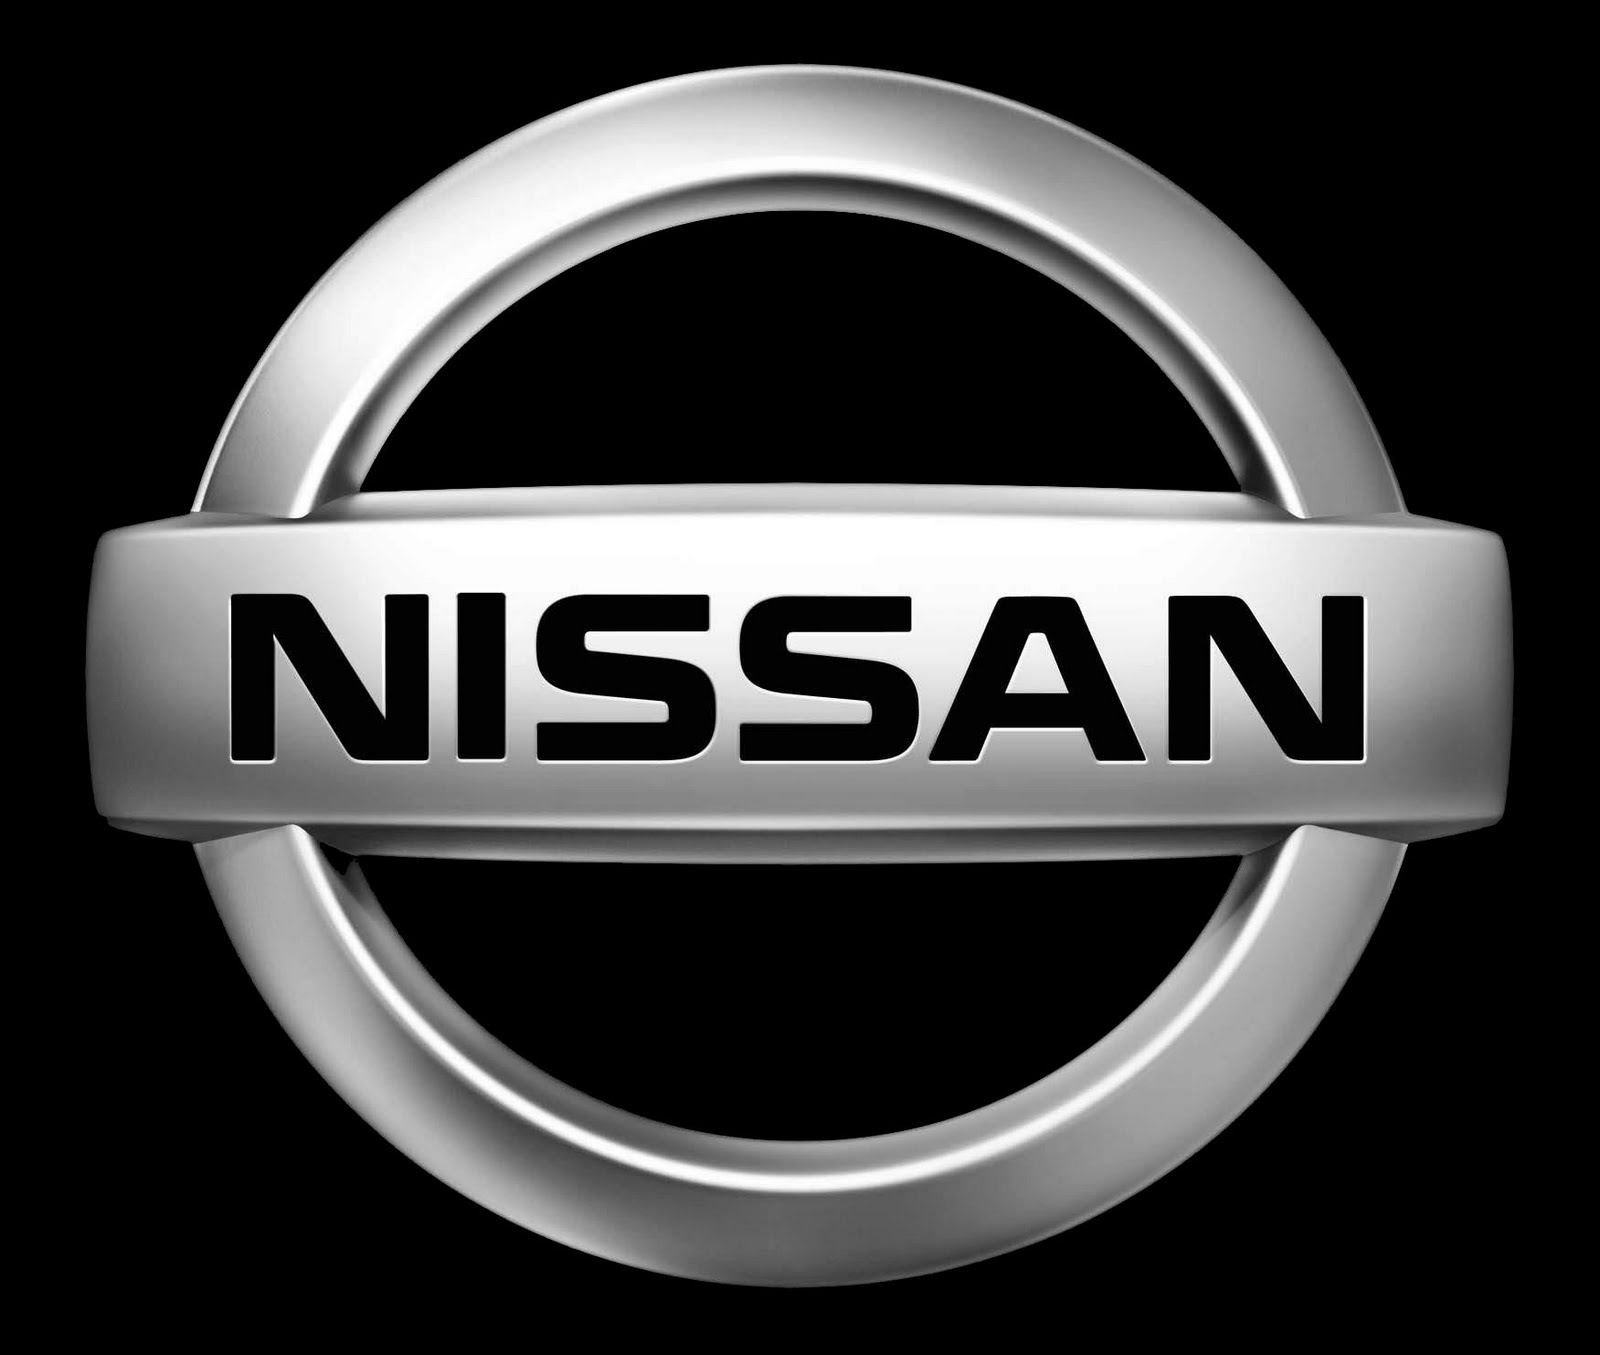 Nissan logos history #3